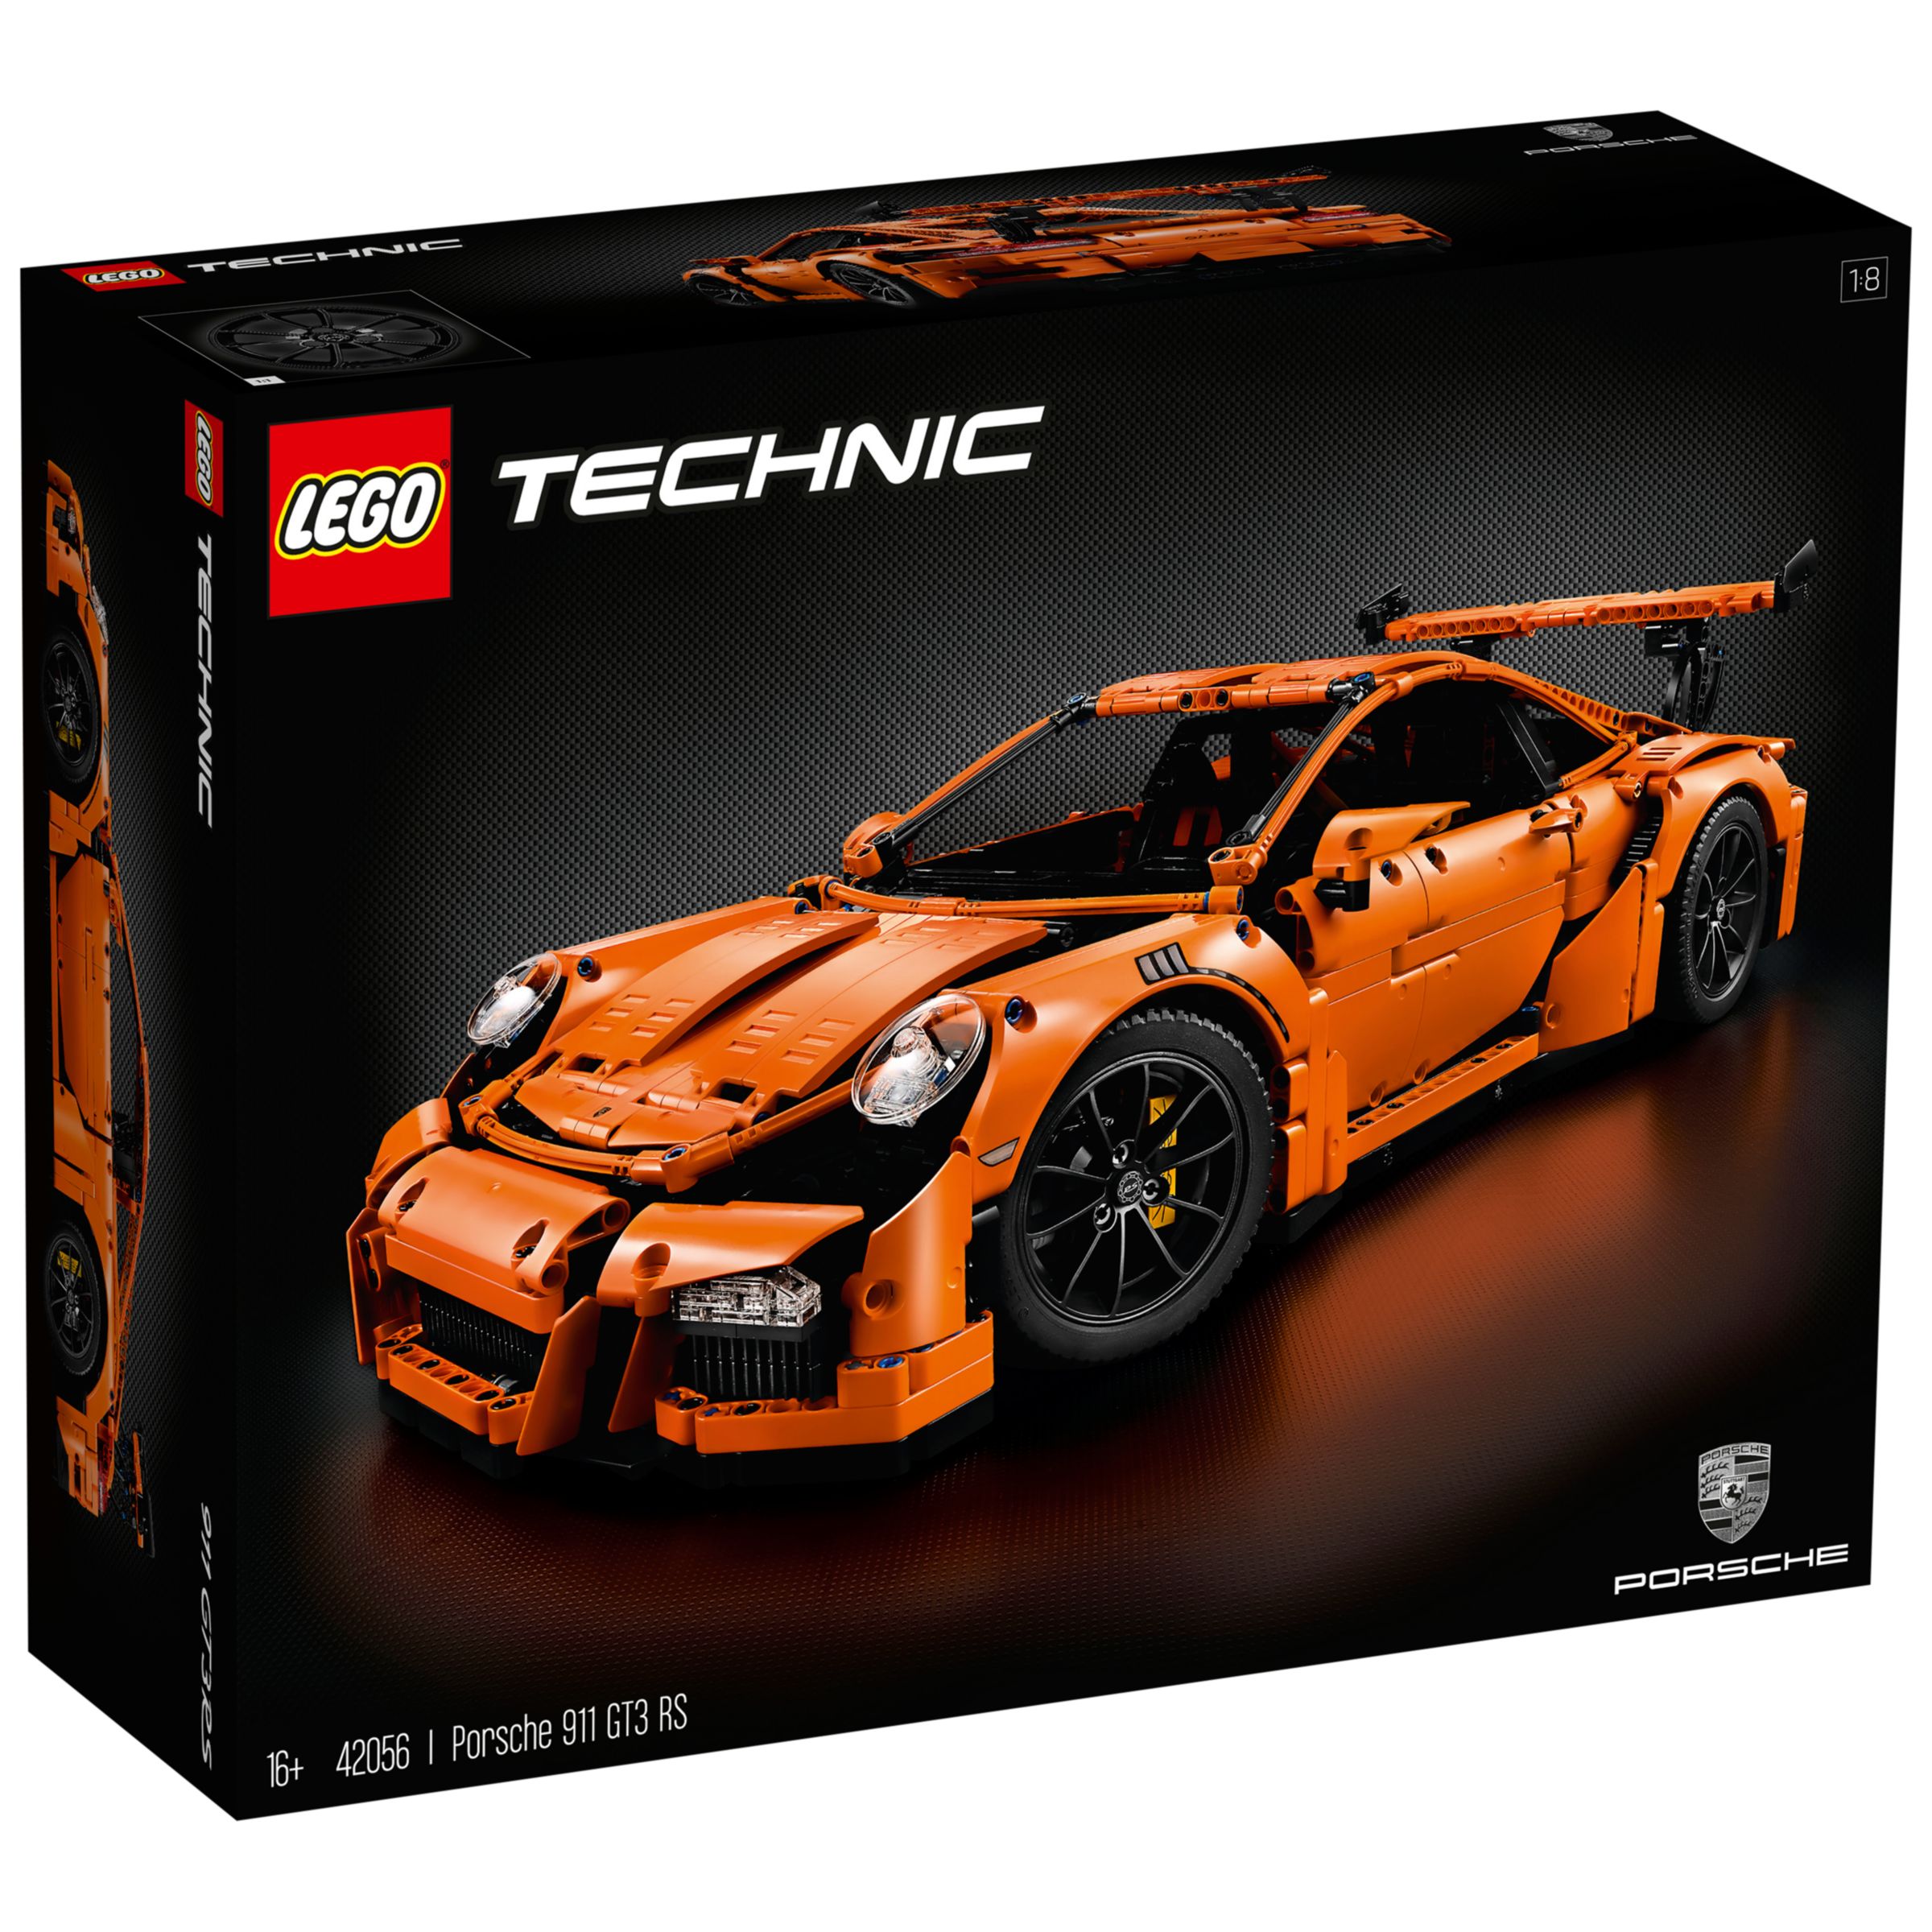 LEGO Technic 42056 Porsche 911 GT3 RS at John Lewis & Partners